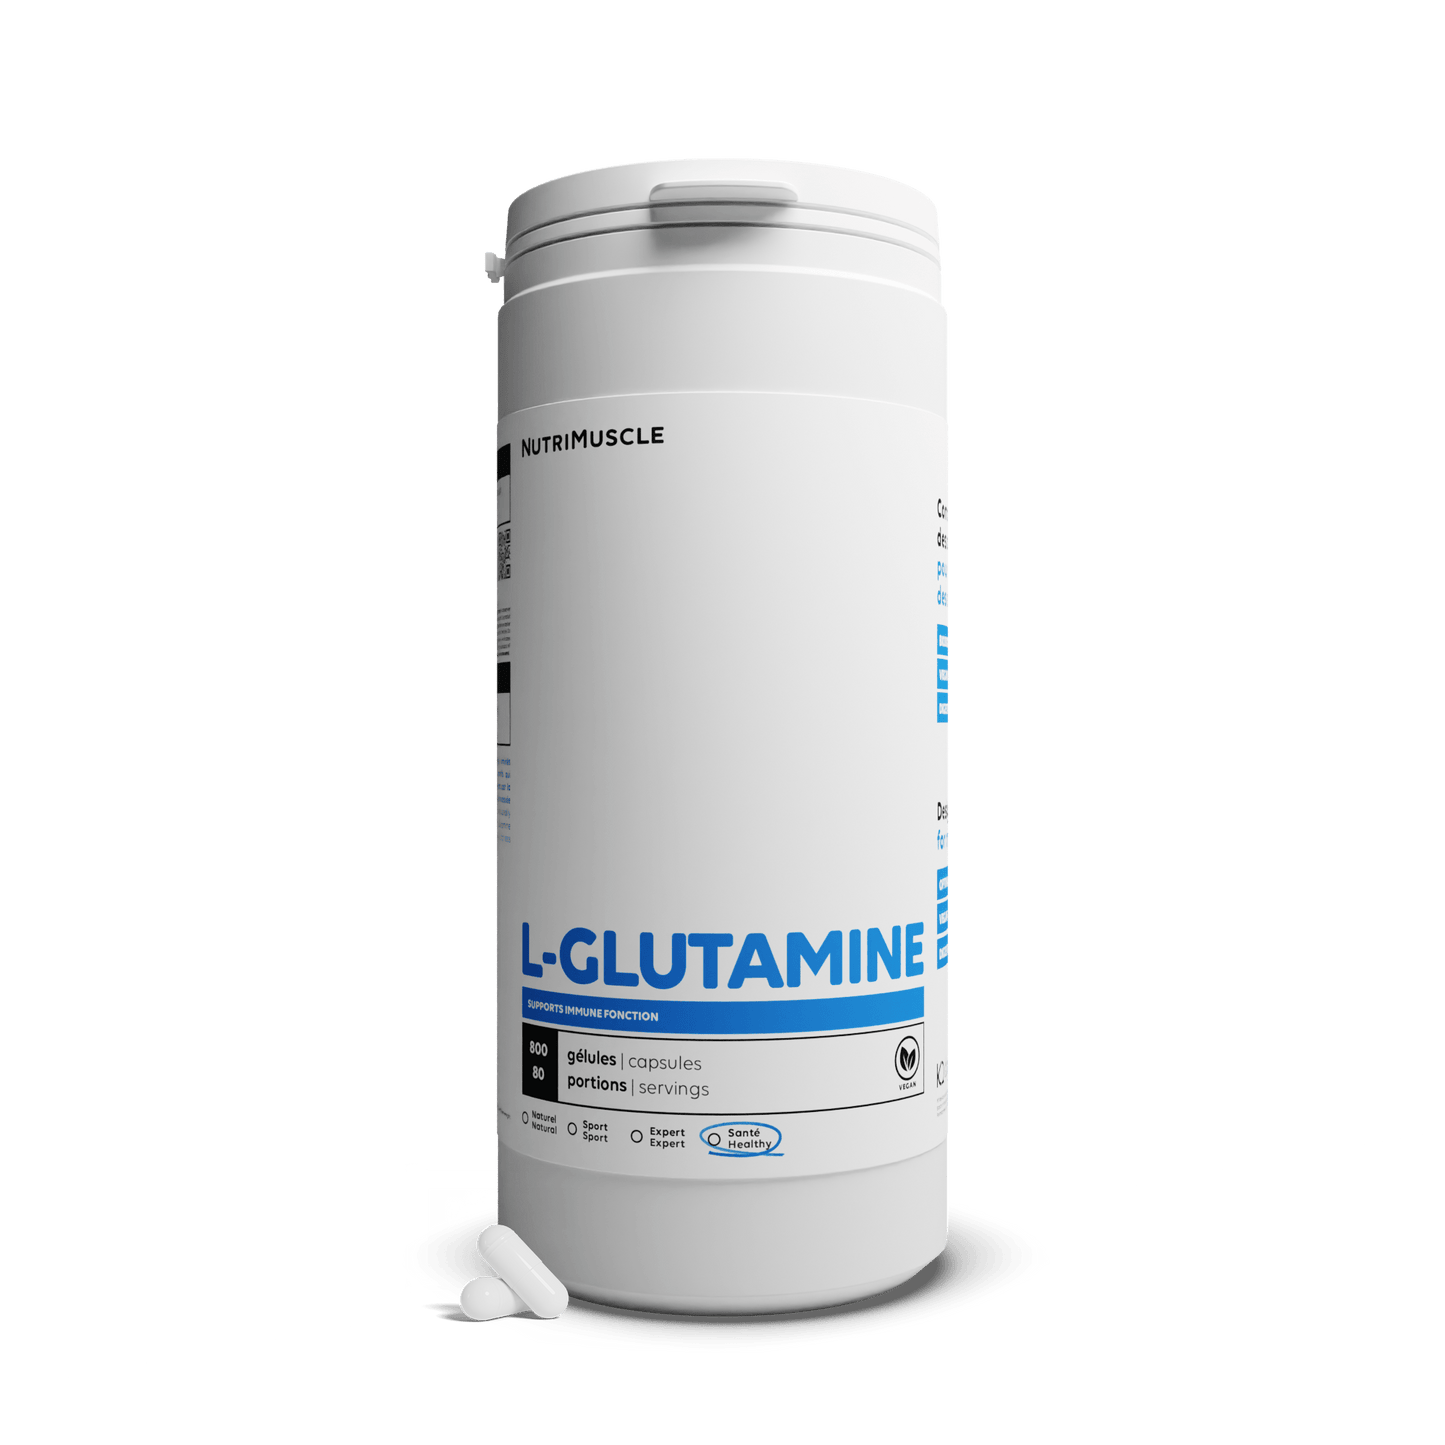 Nutrimuscle Acides aminés 800 gélules Glutamine (L-Glutamine) en gélules